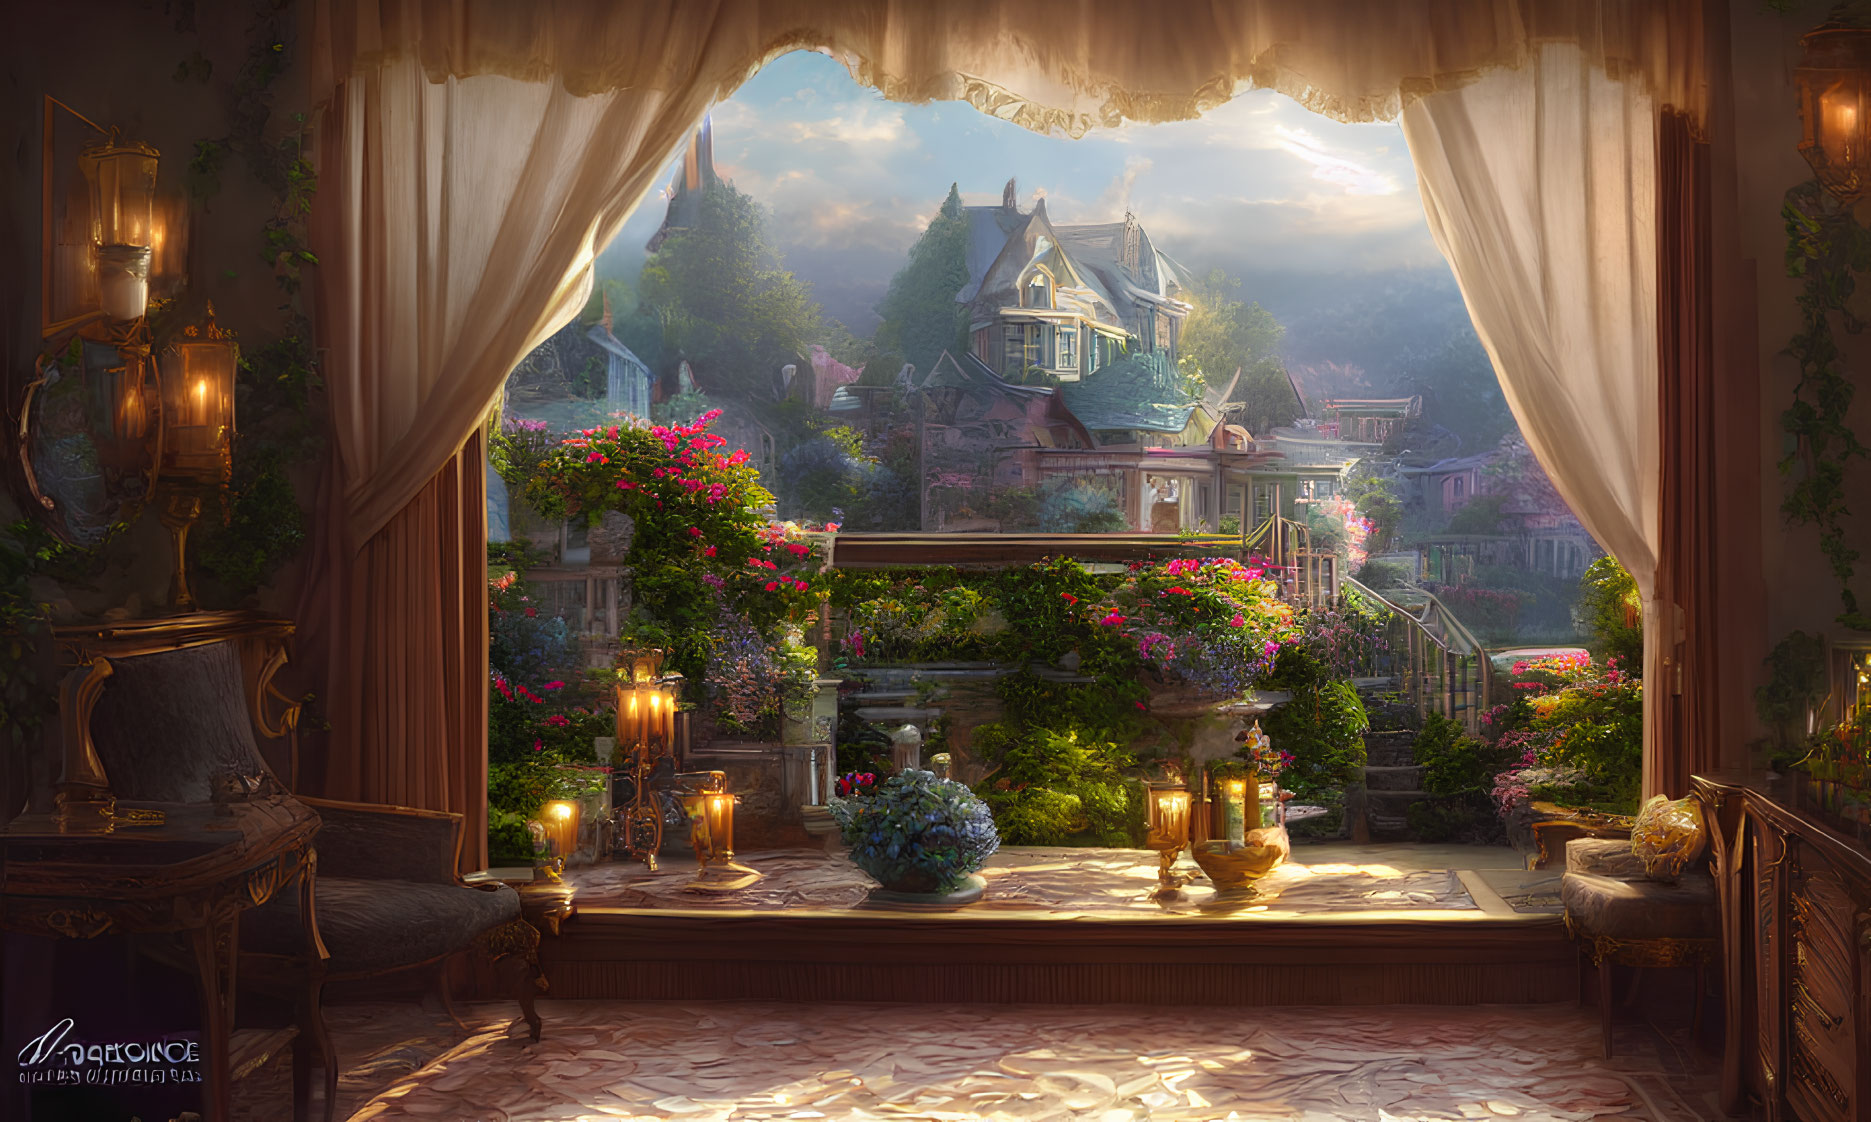 Cozy interior overlooking fairy-tale village at sunset